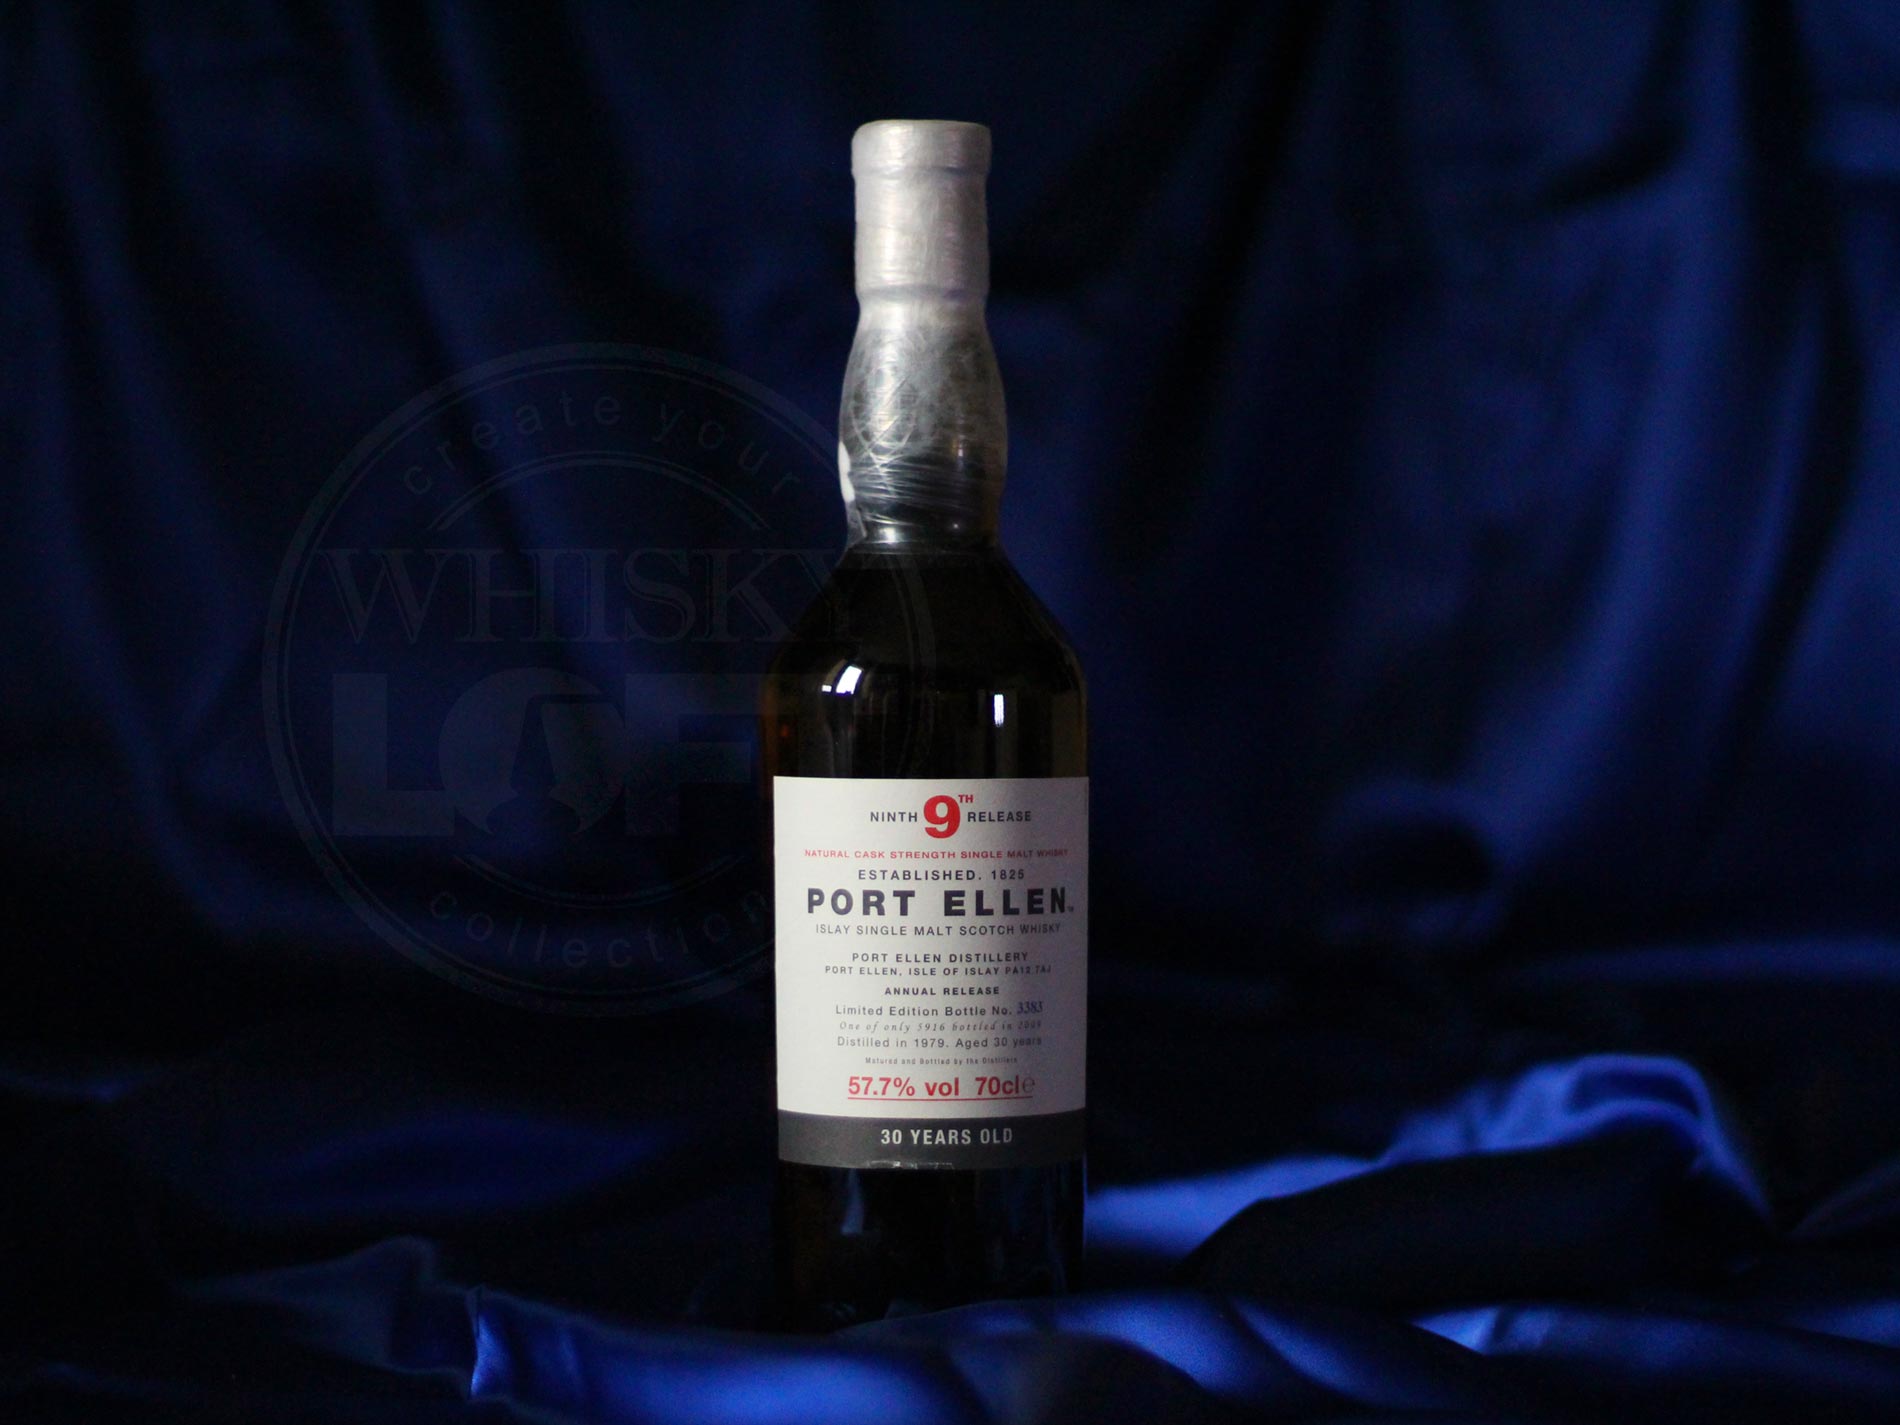 Single Malt Scotch Whisky, 1979 distilled, 30 years old.